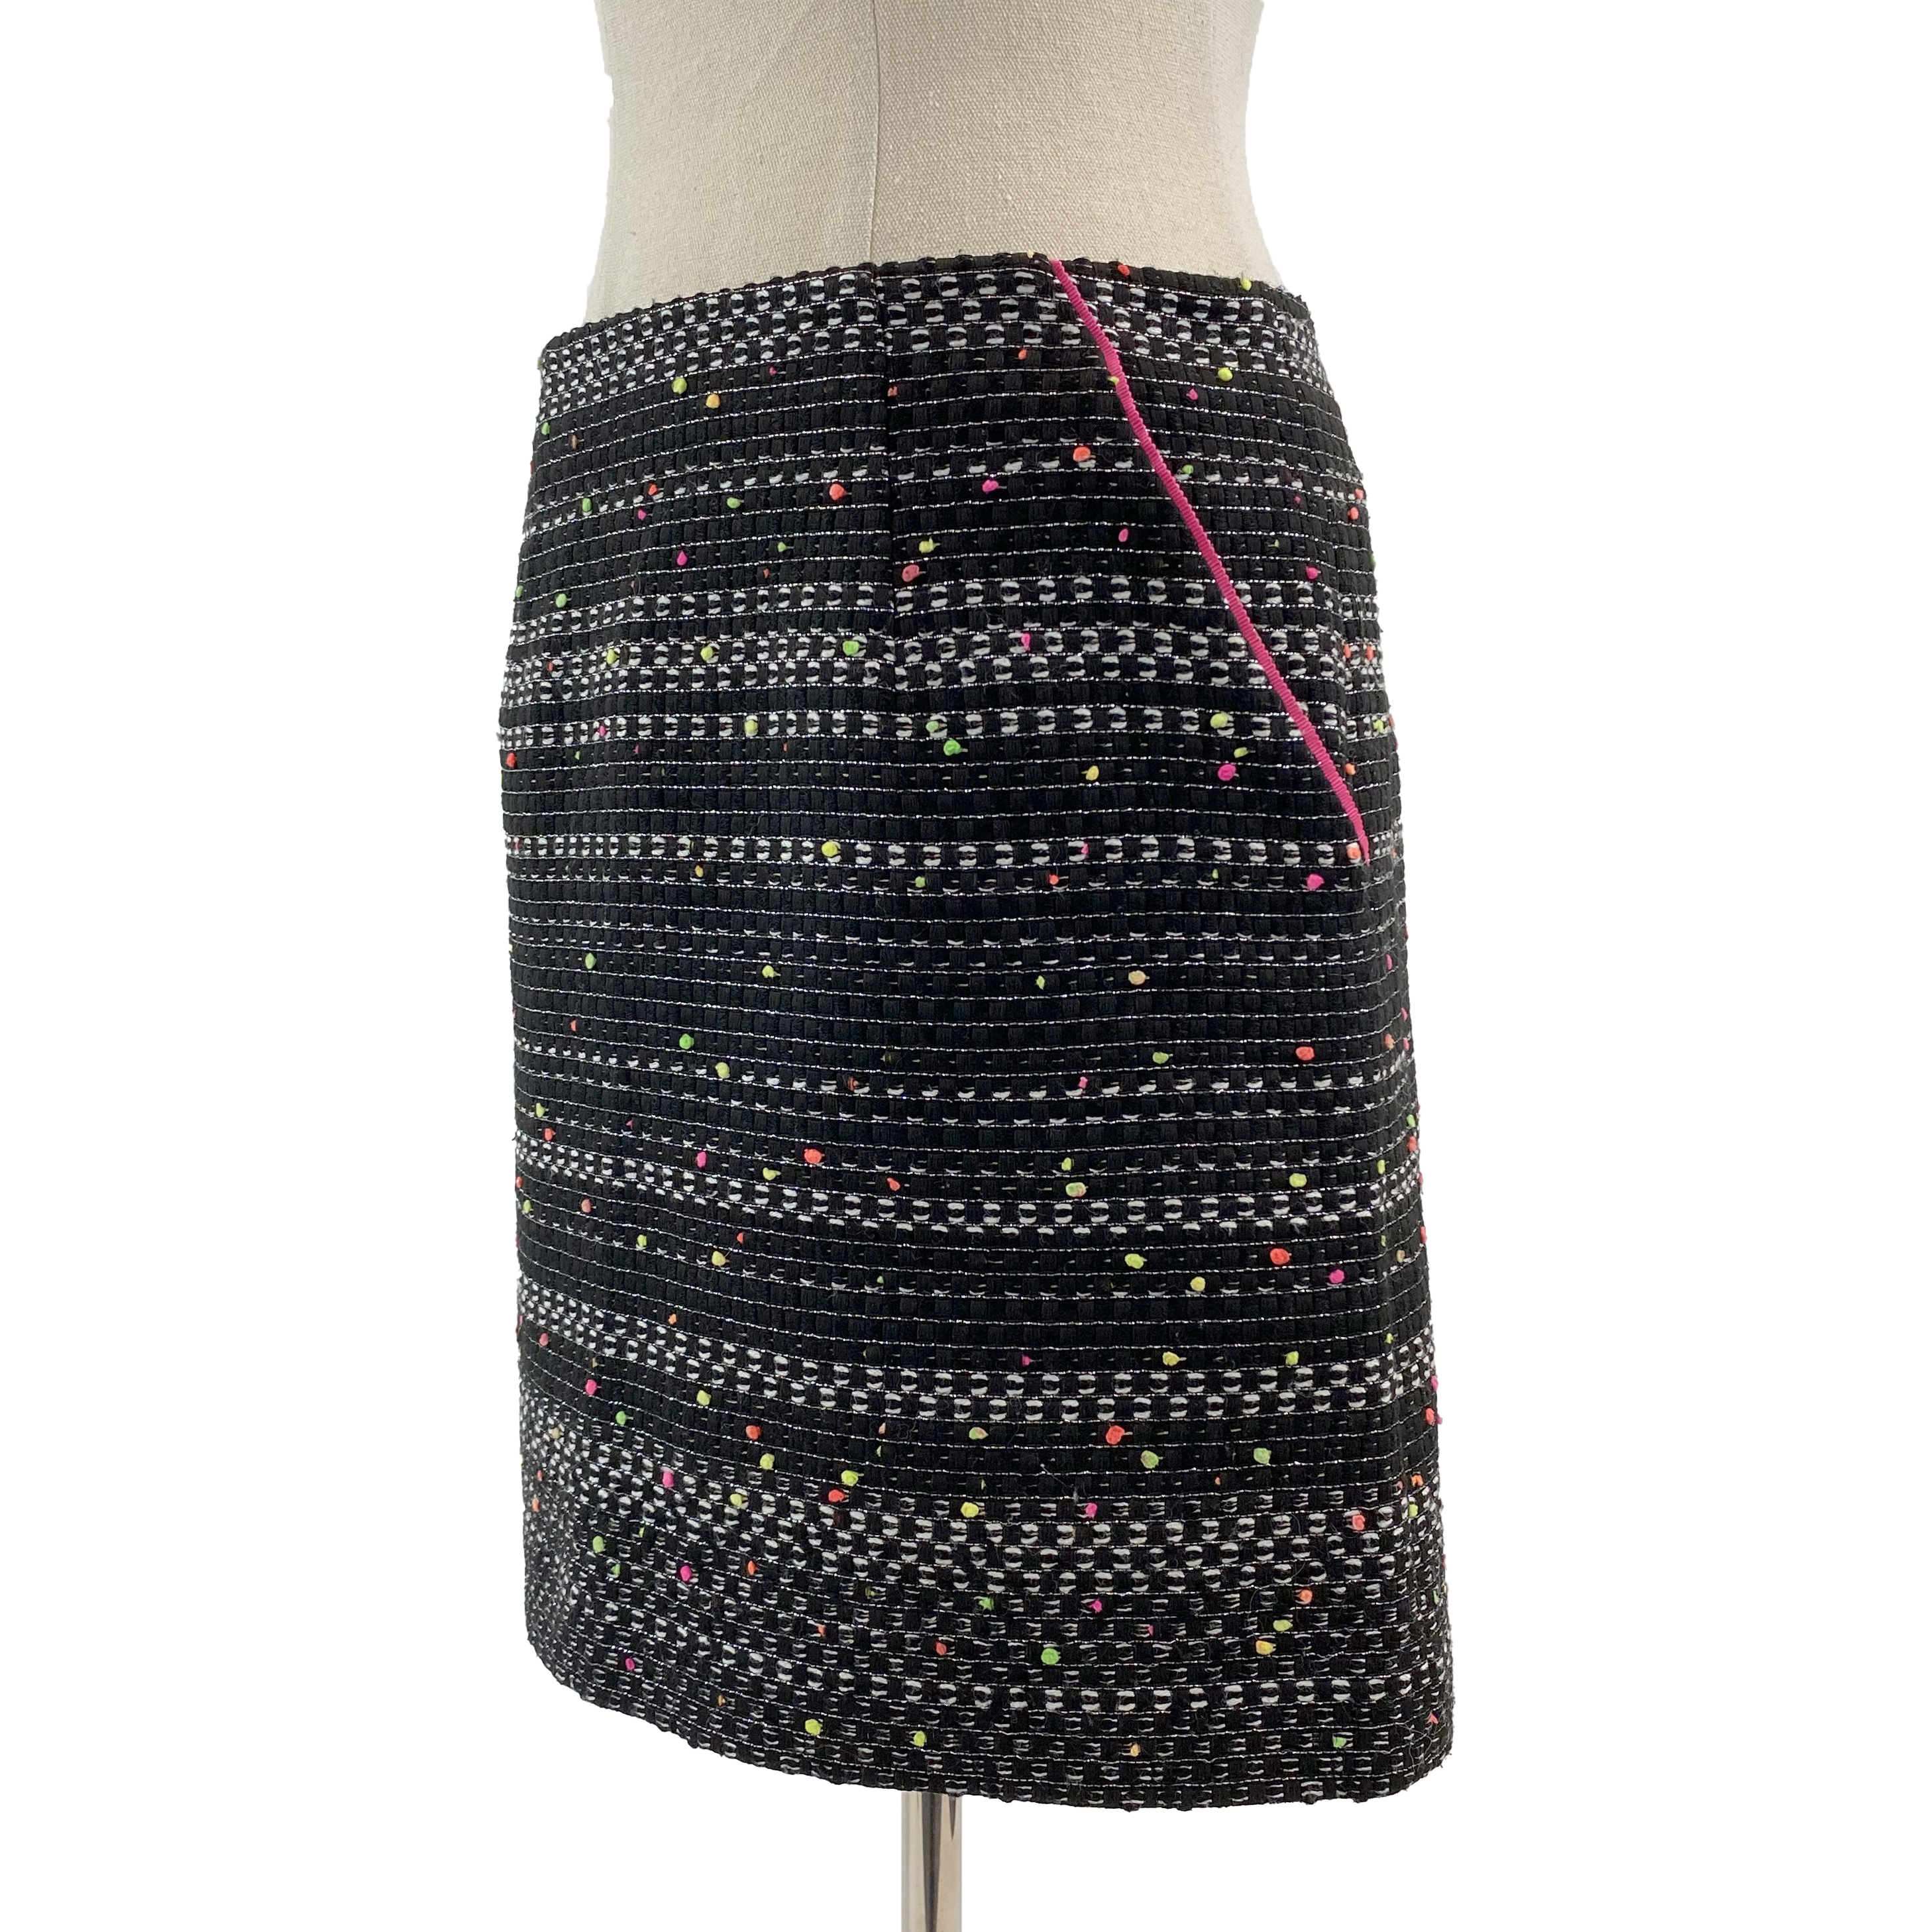 Marcs Black/Neon Mini-Skirt